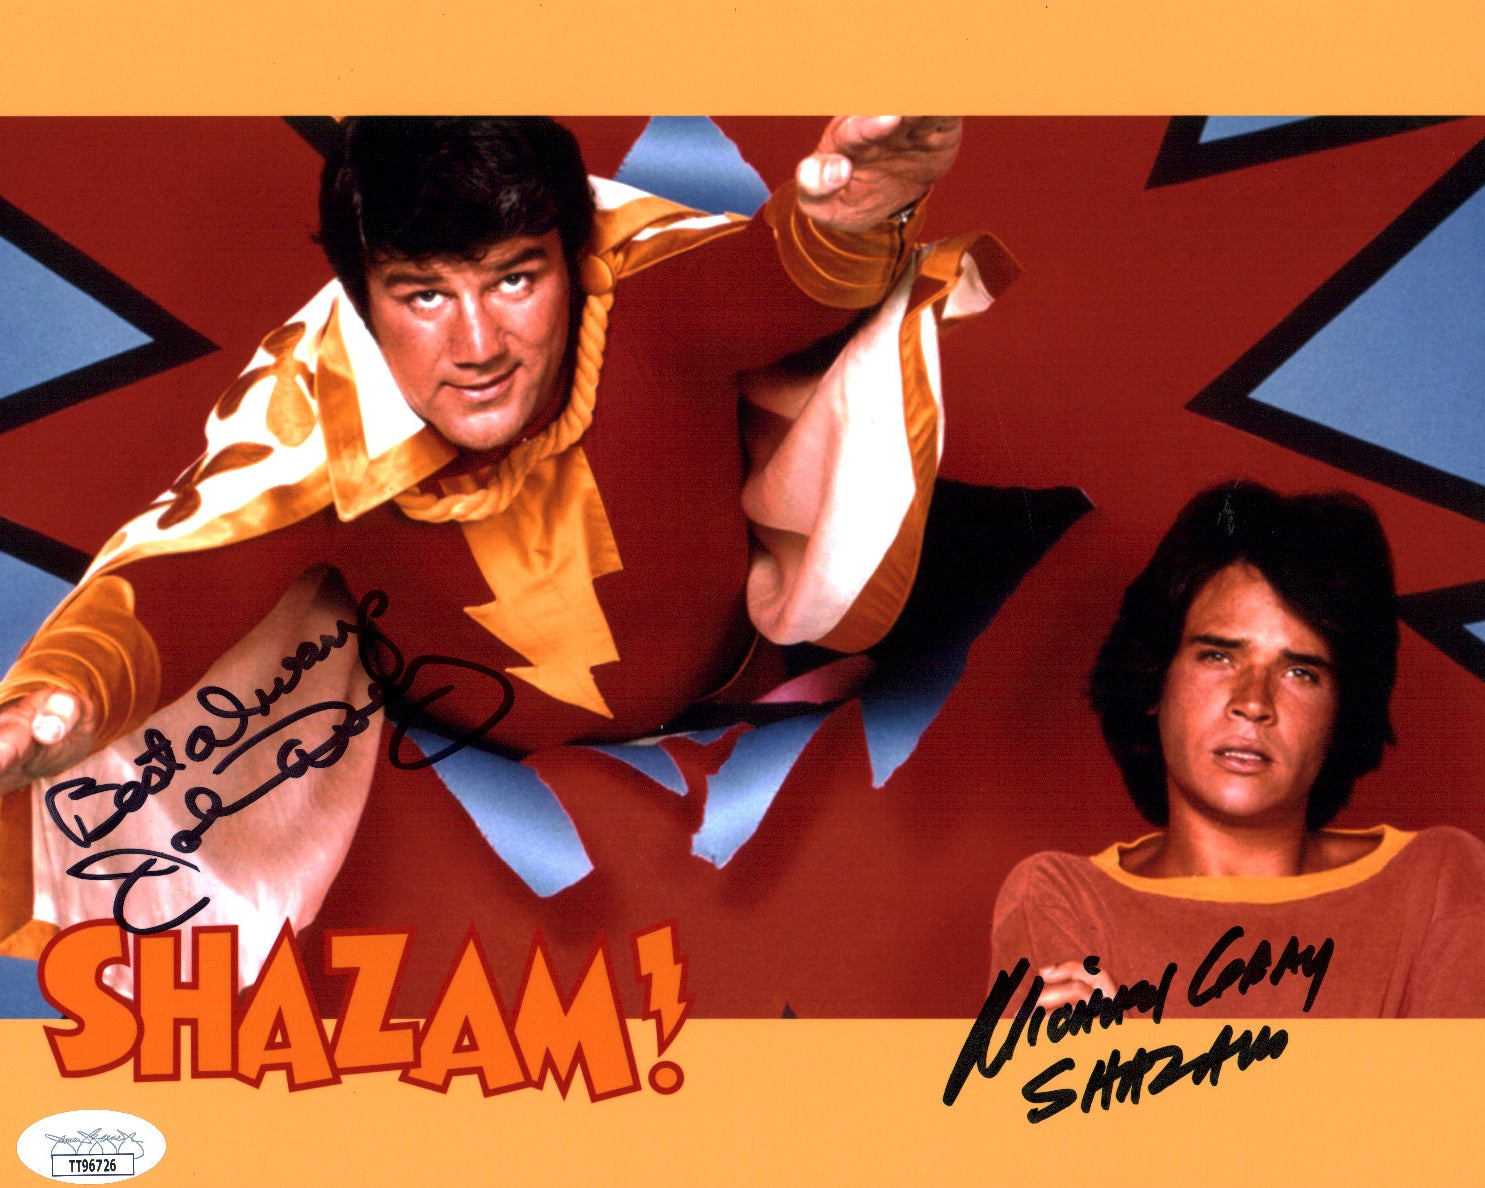 Shazam! 8x10 Photo Cast x2 Signed John Davey, Michael Gray JSA Certified Autograph GalaxyCon